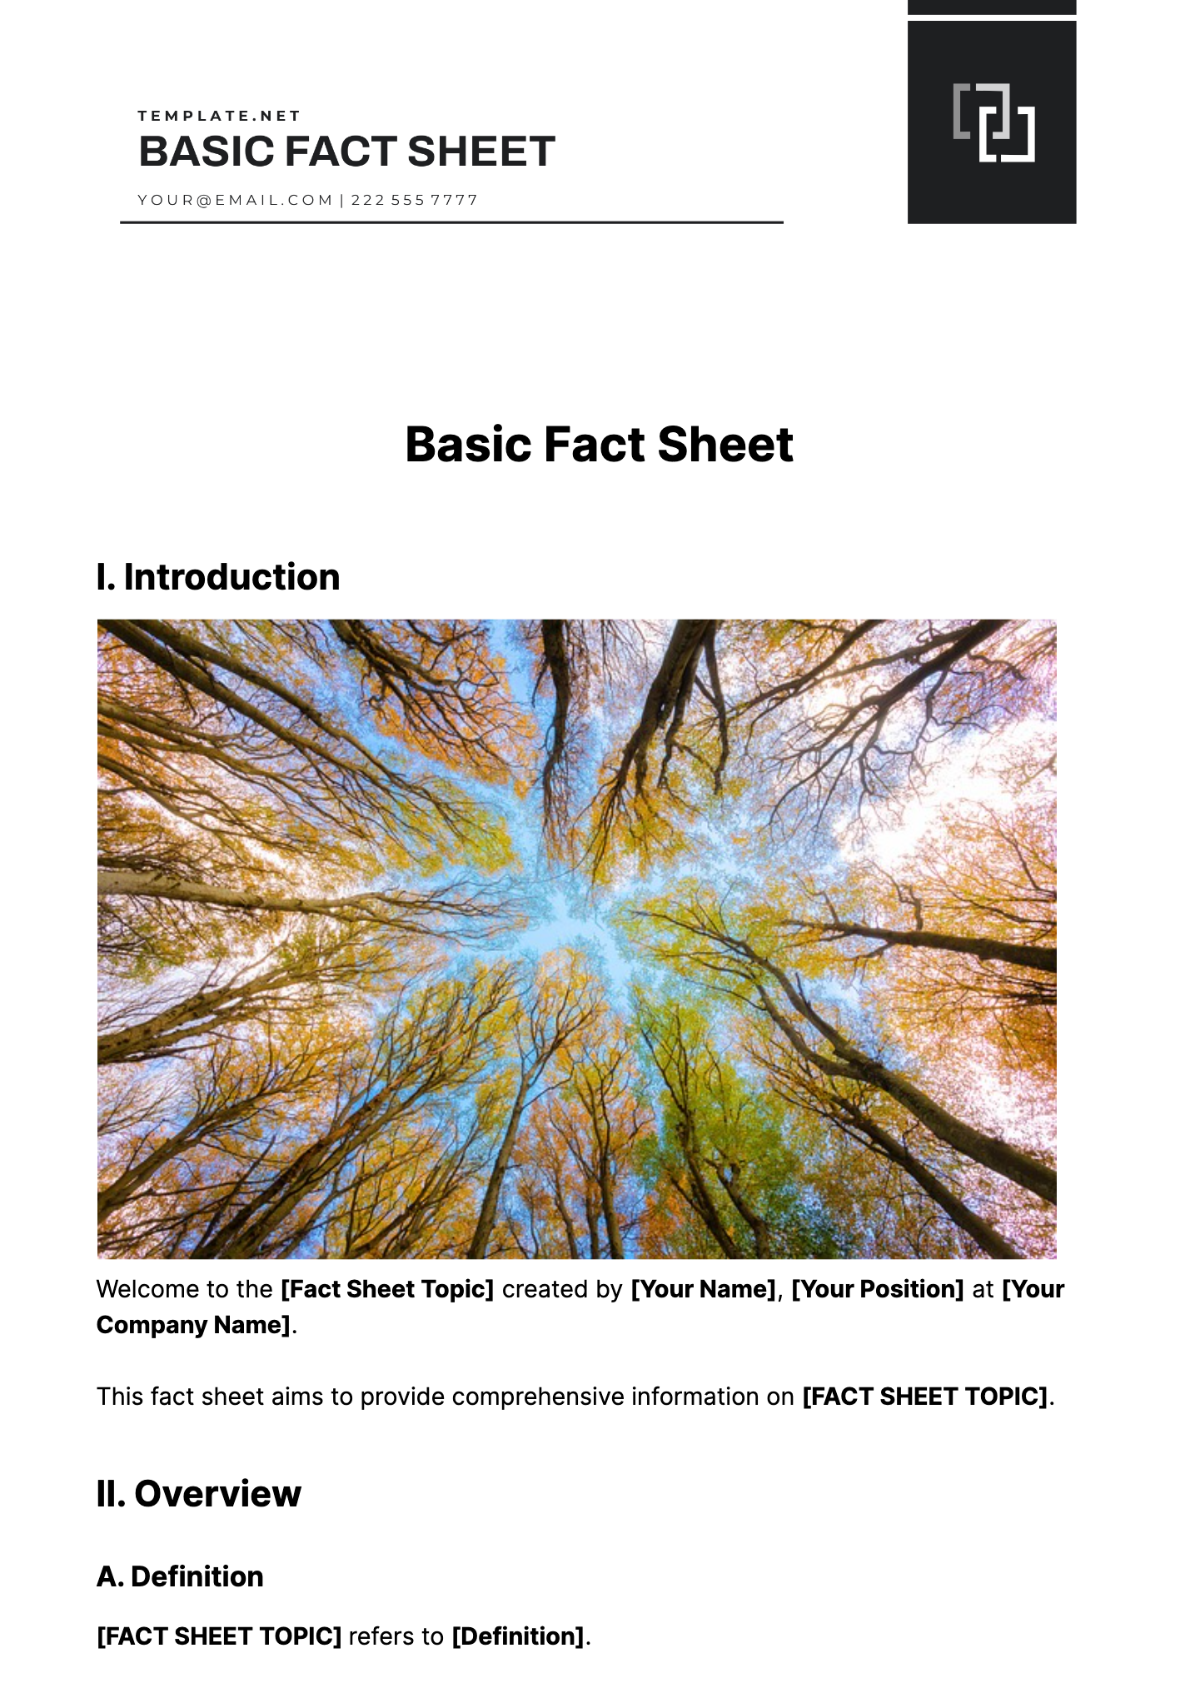 Basic Fact Sheet Template